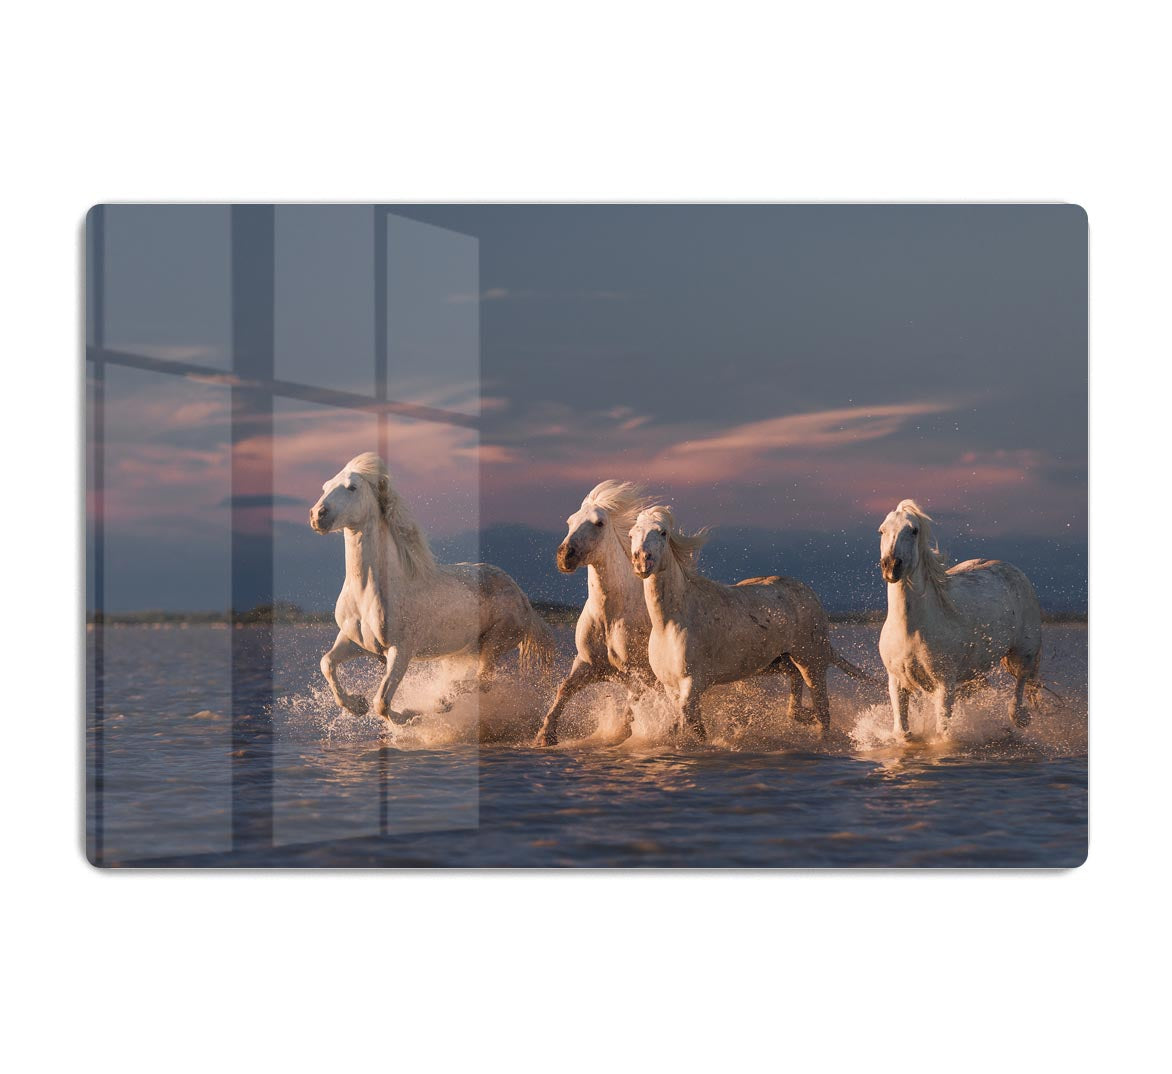 Wite Horses Running In Water 2 HD Metal Print - Canvas Art Rocks - 1